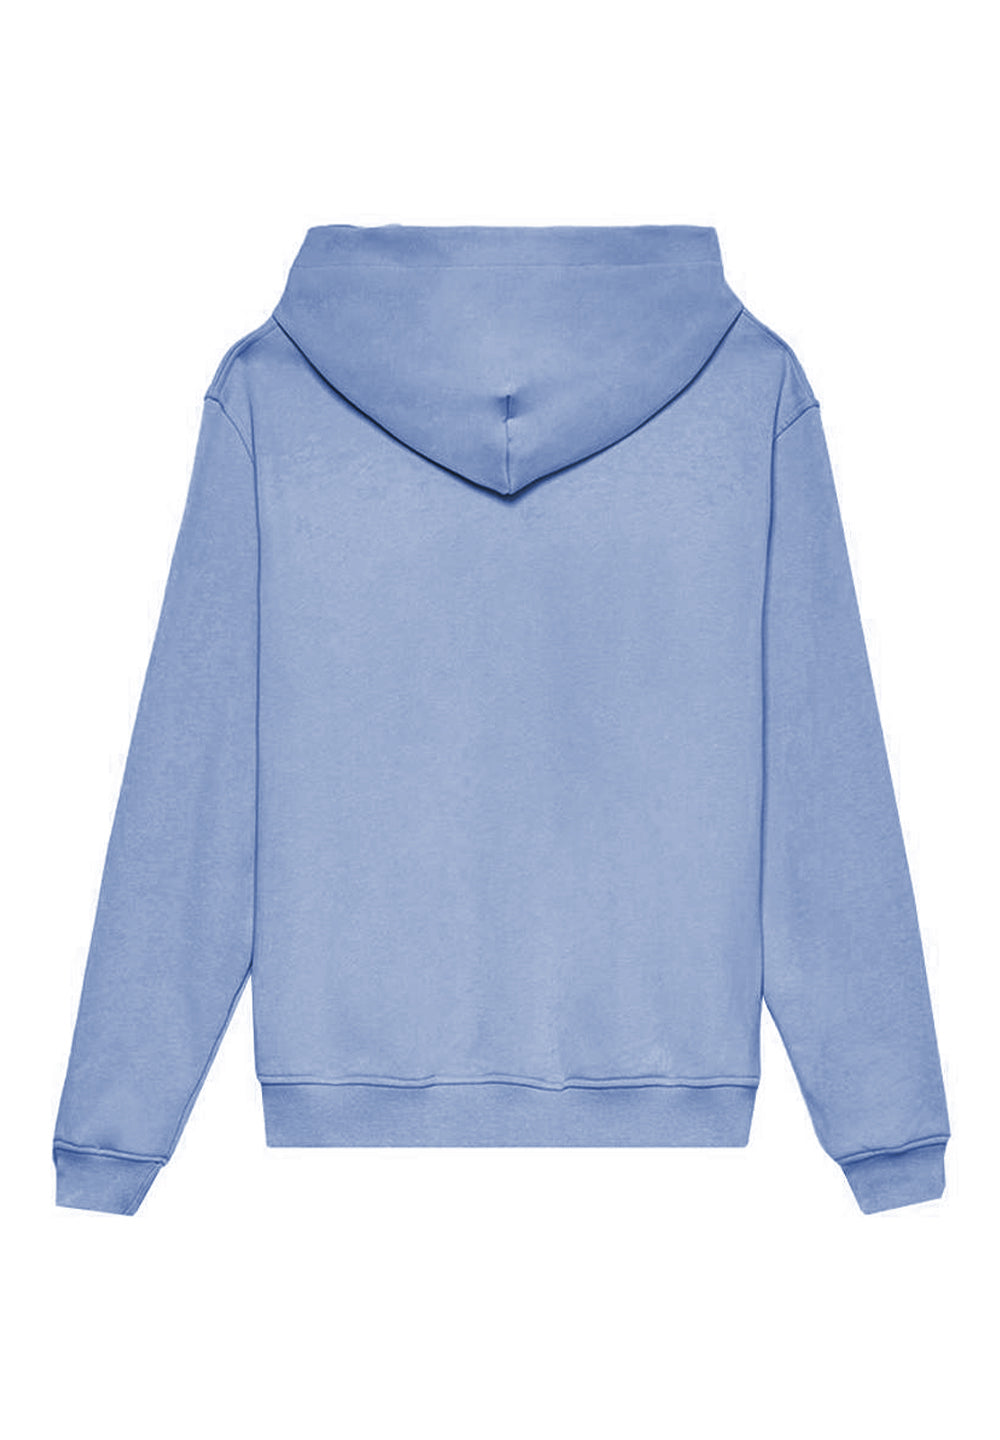 Air force hooded sweatshirt for boys